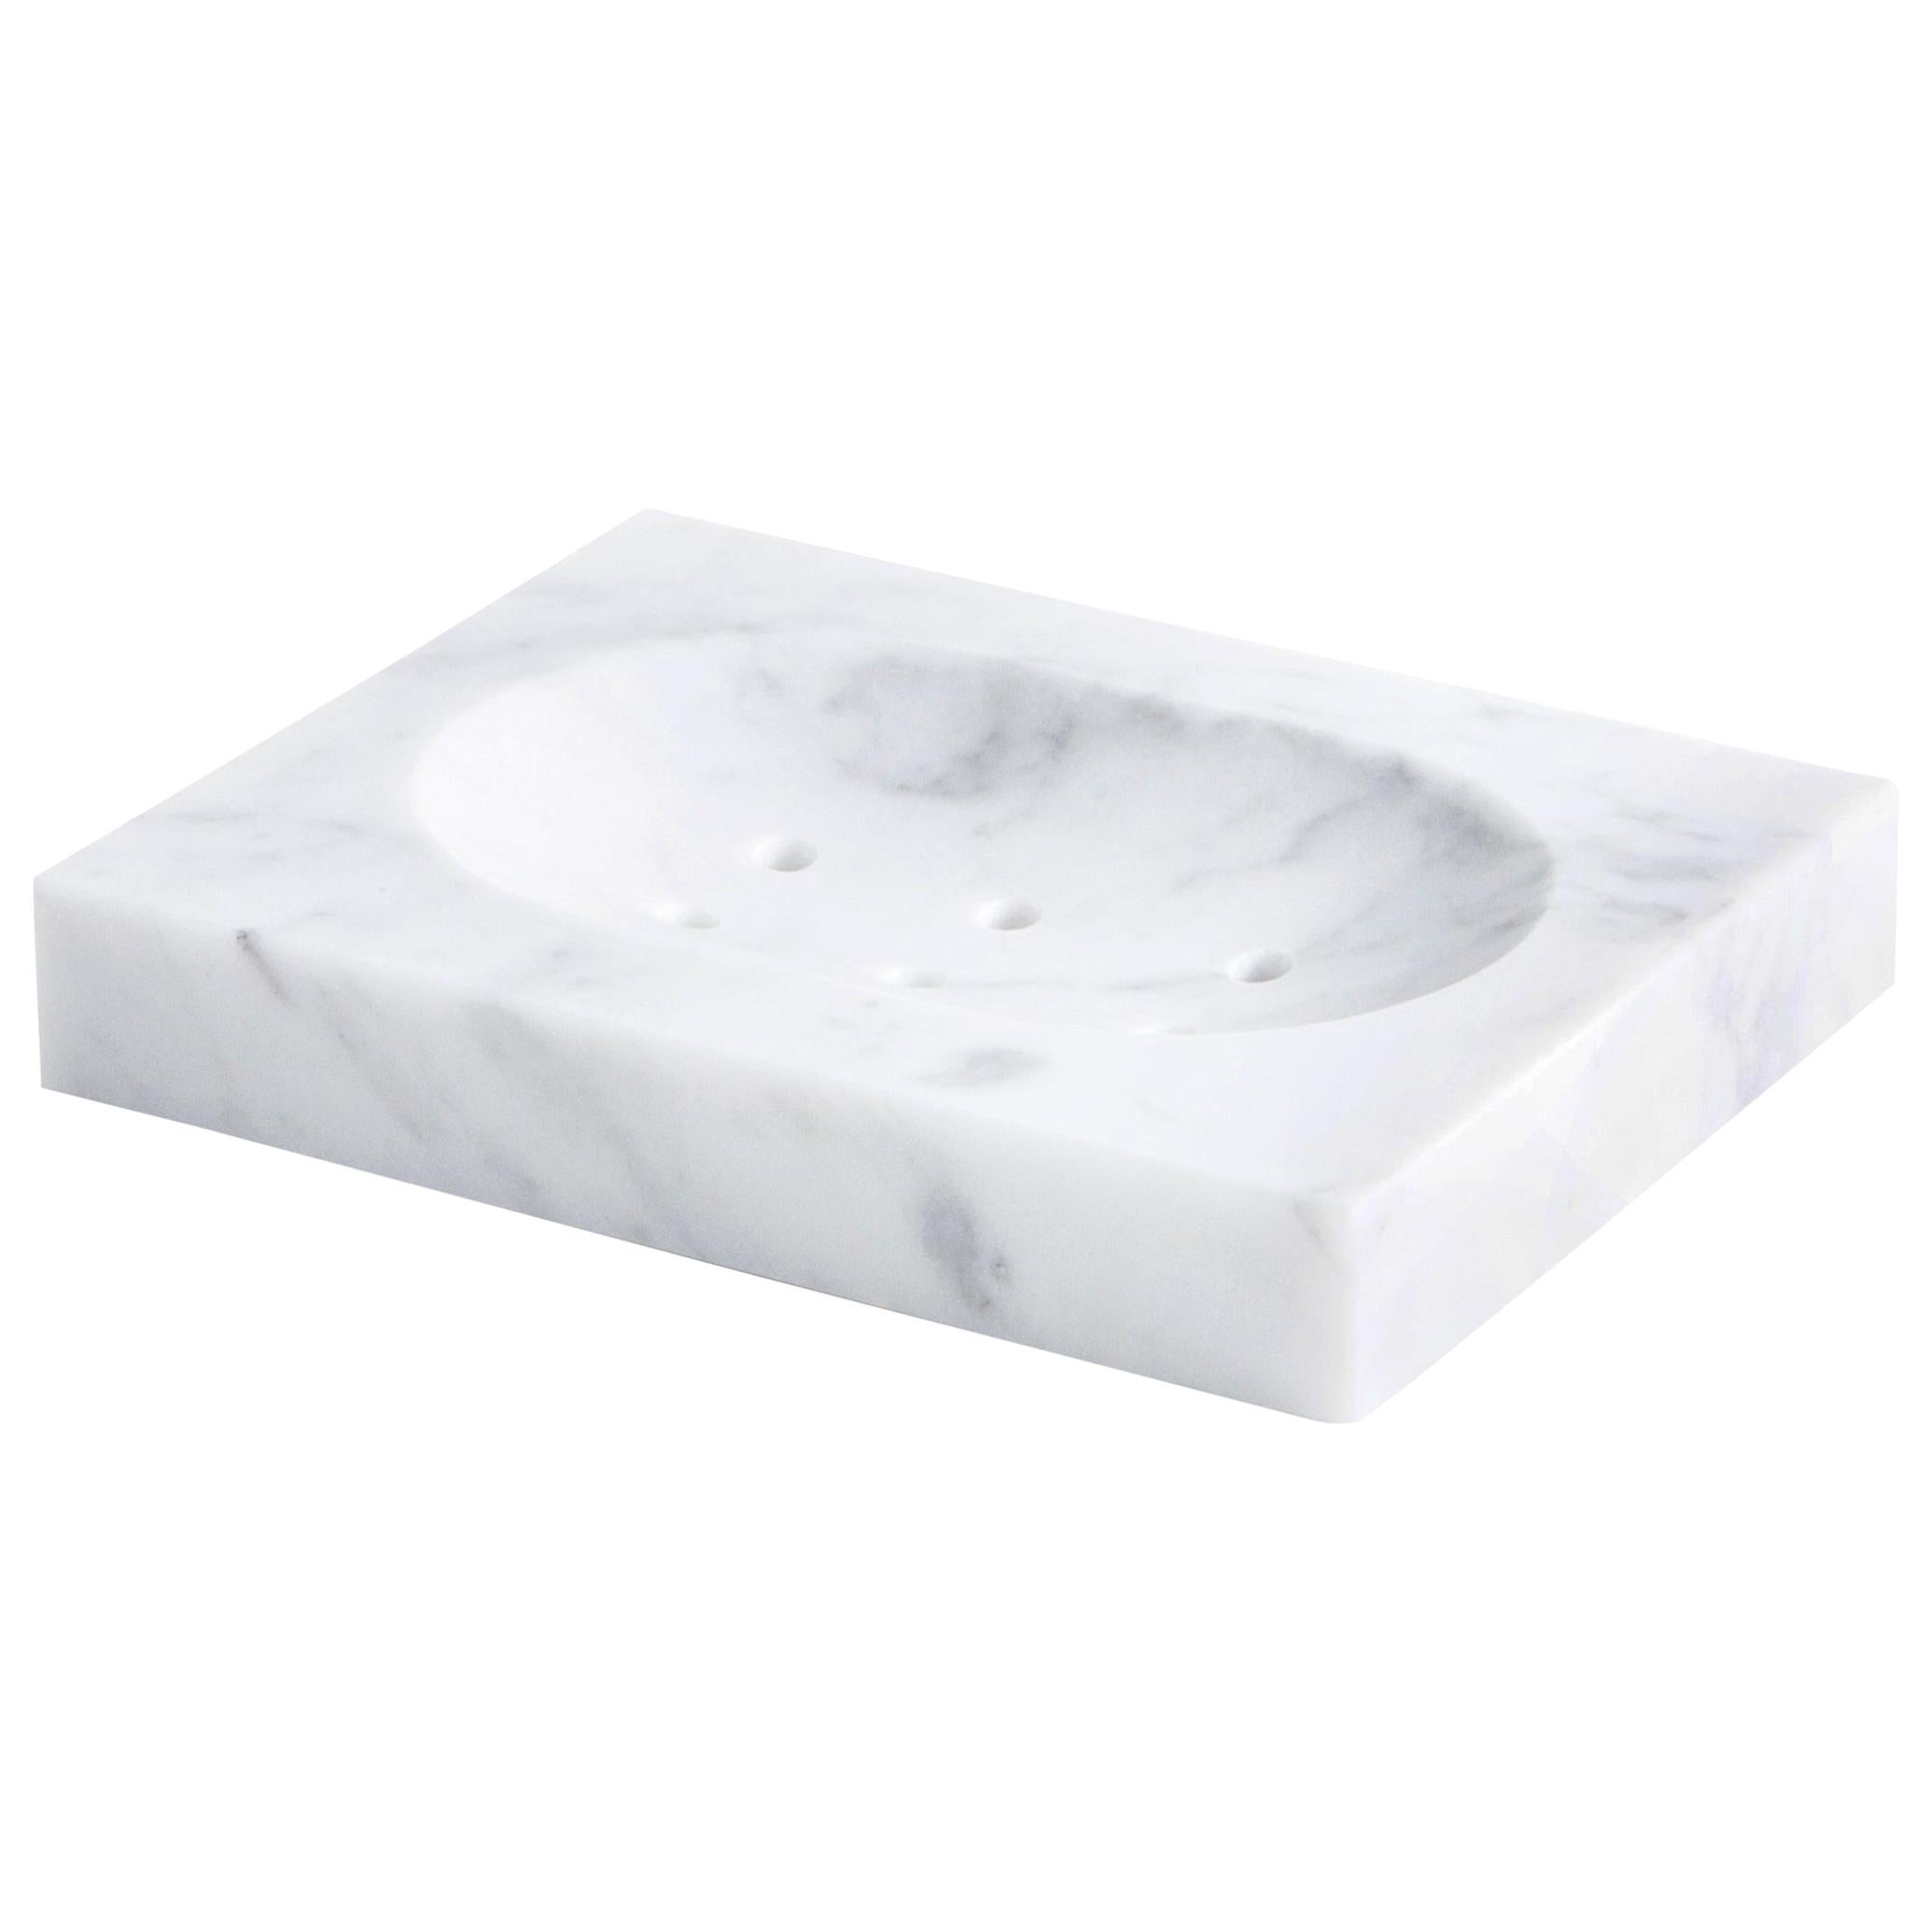 Handmade Squared Soap Dish in White Carrara Marble